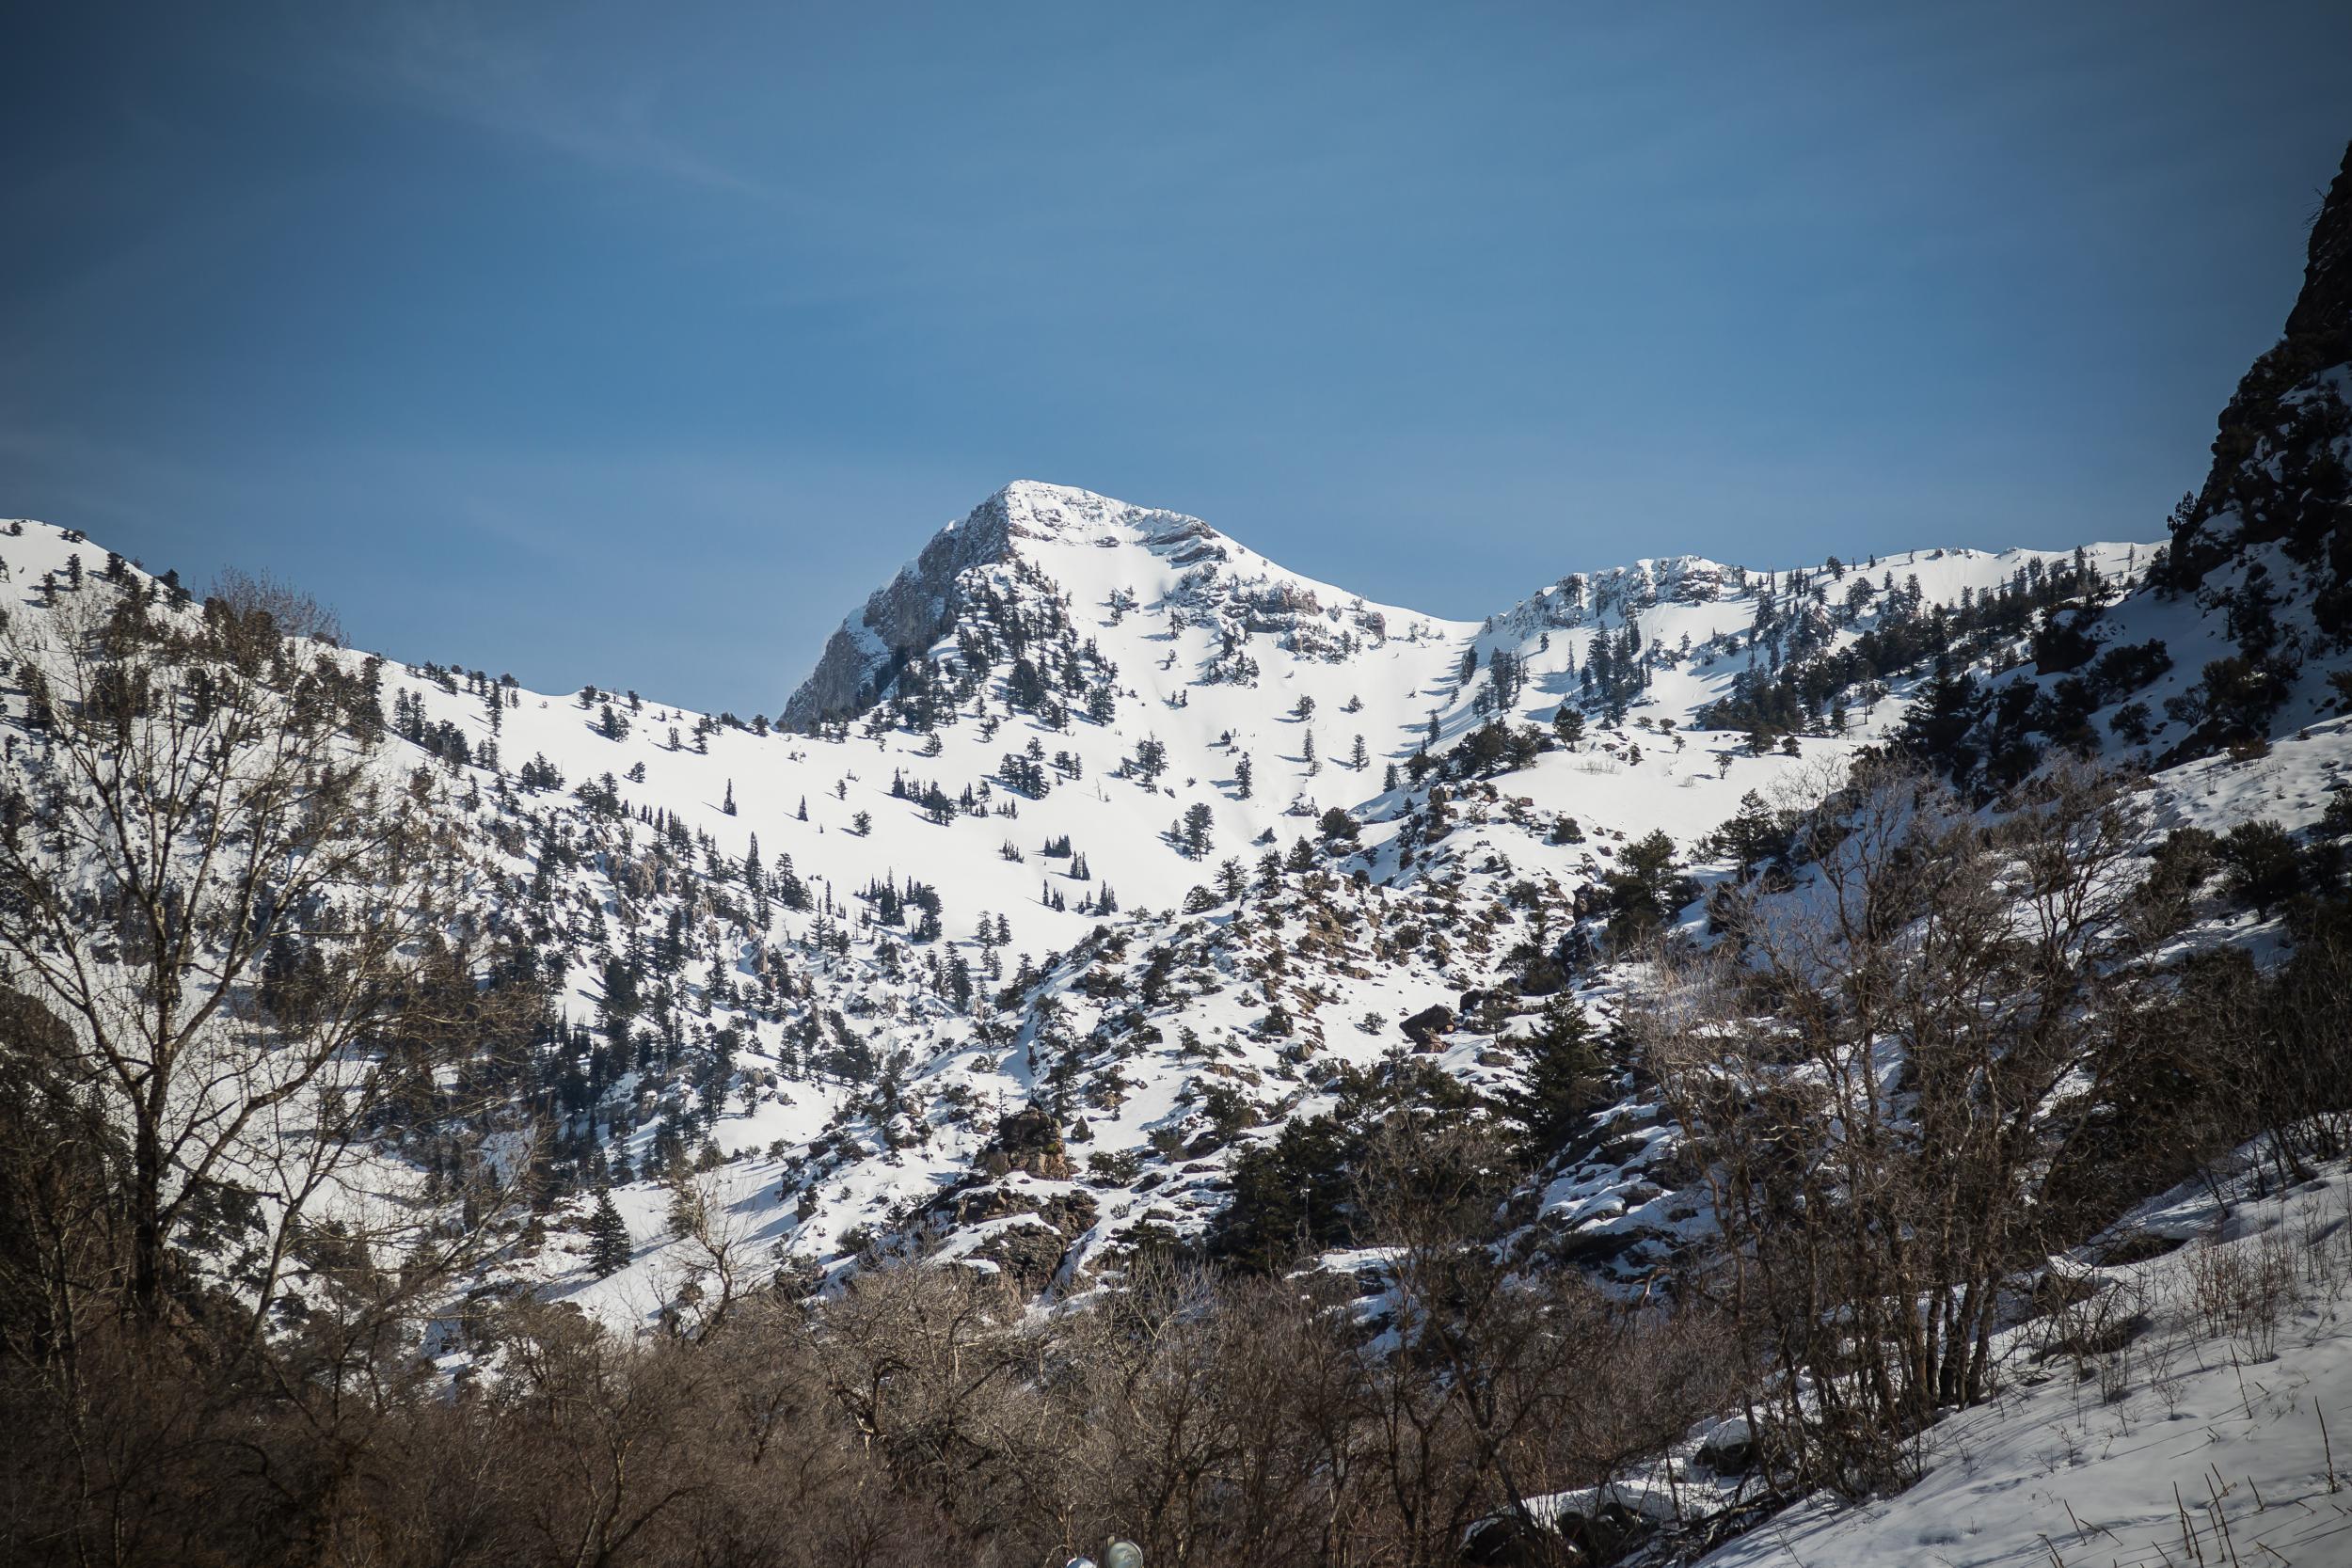 Cherry Peak itself, which Utah's newest ski resort is named for (Chris Pearson/Ski Utah)